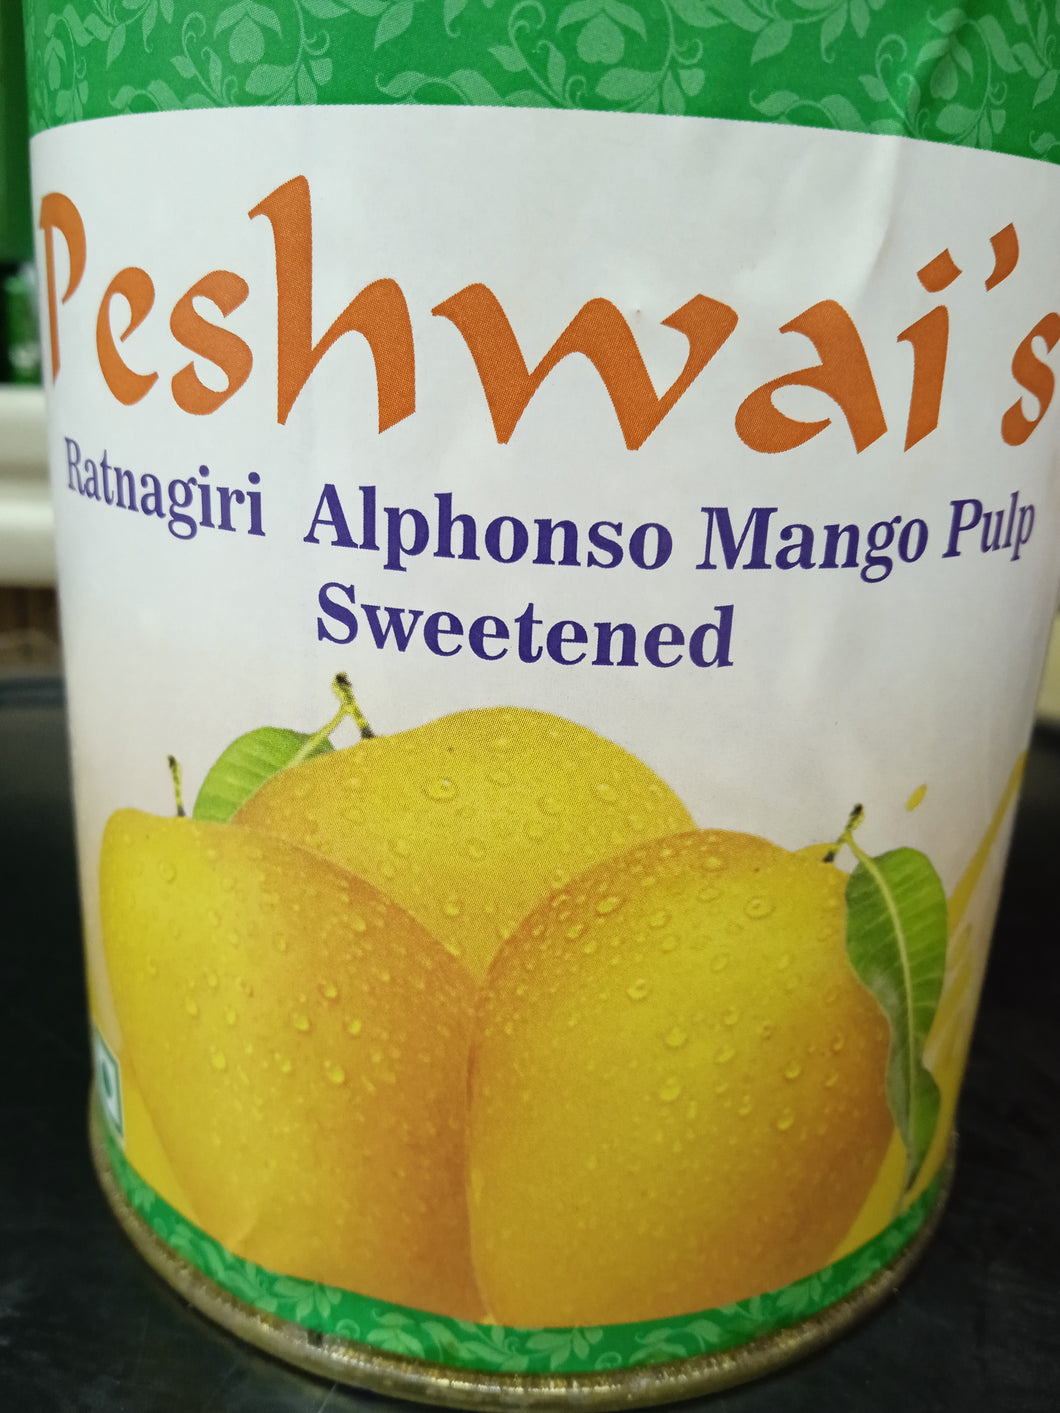 Peshawai Alphonso Mango ango Pulp